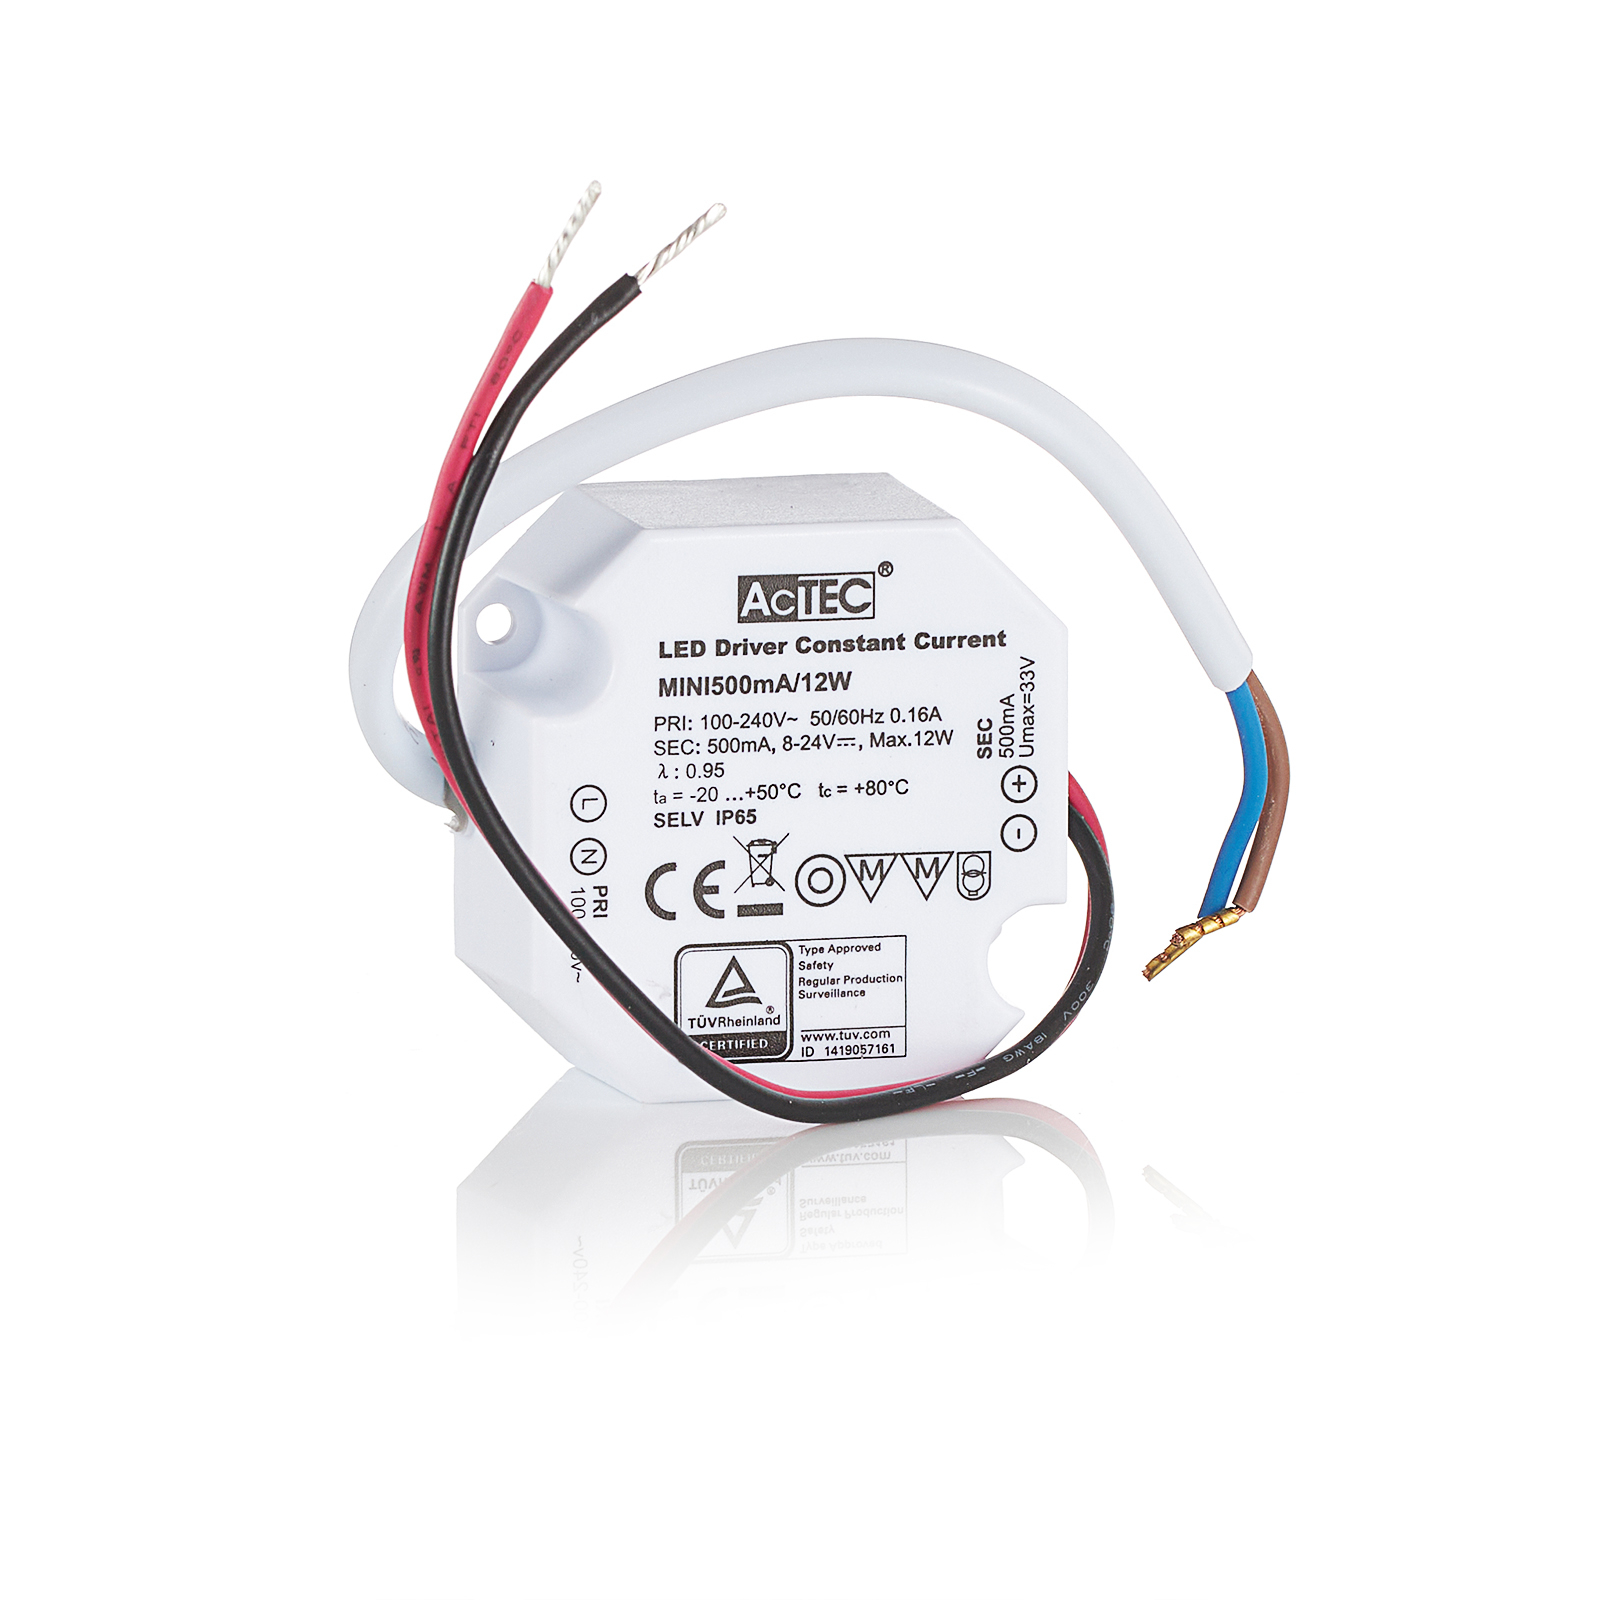 AcTEC Mini LED driver CC 500mA, 12W, IP65